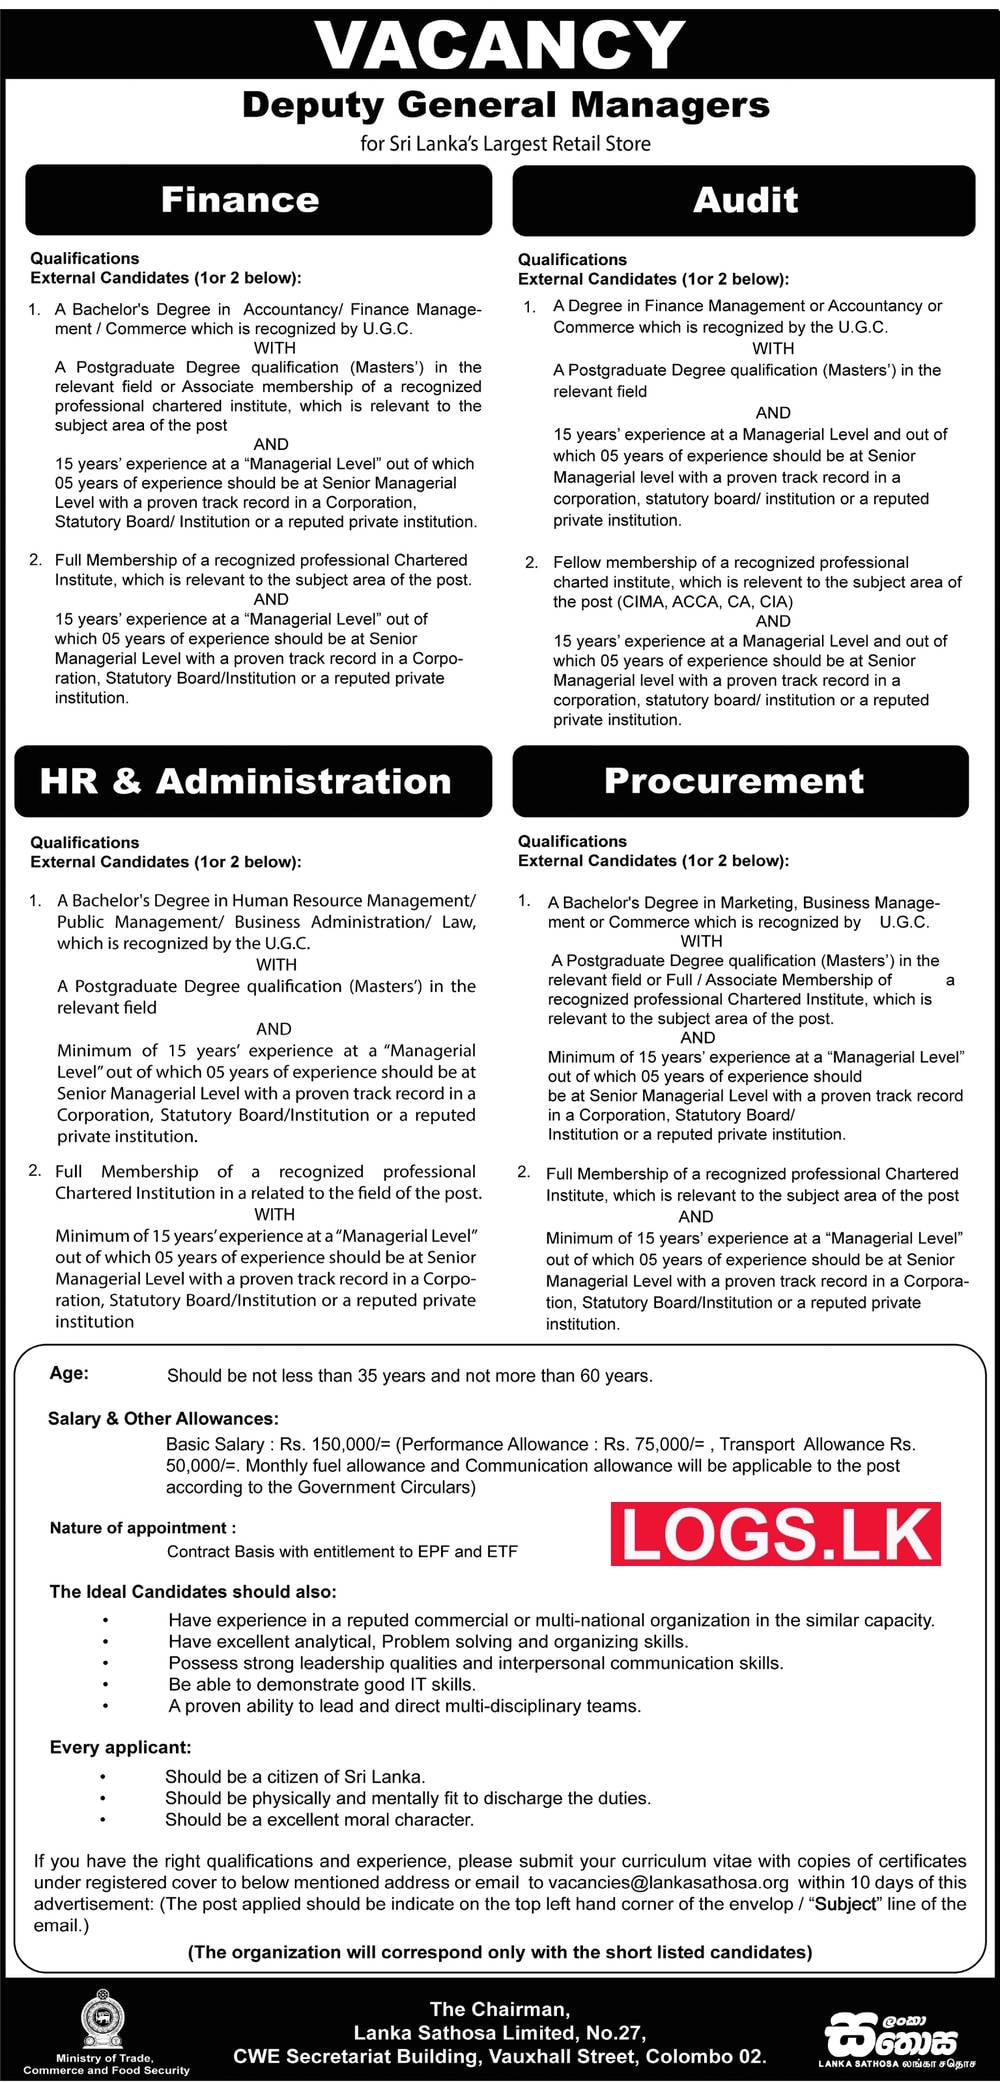 Deputy General Managers - Lanka Sathosa Vacancies 2023 Application Form, Details Download